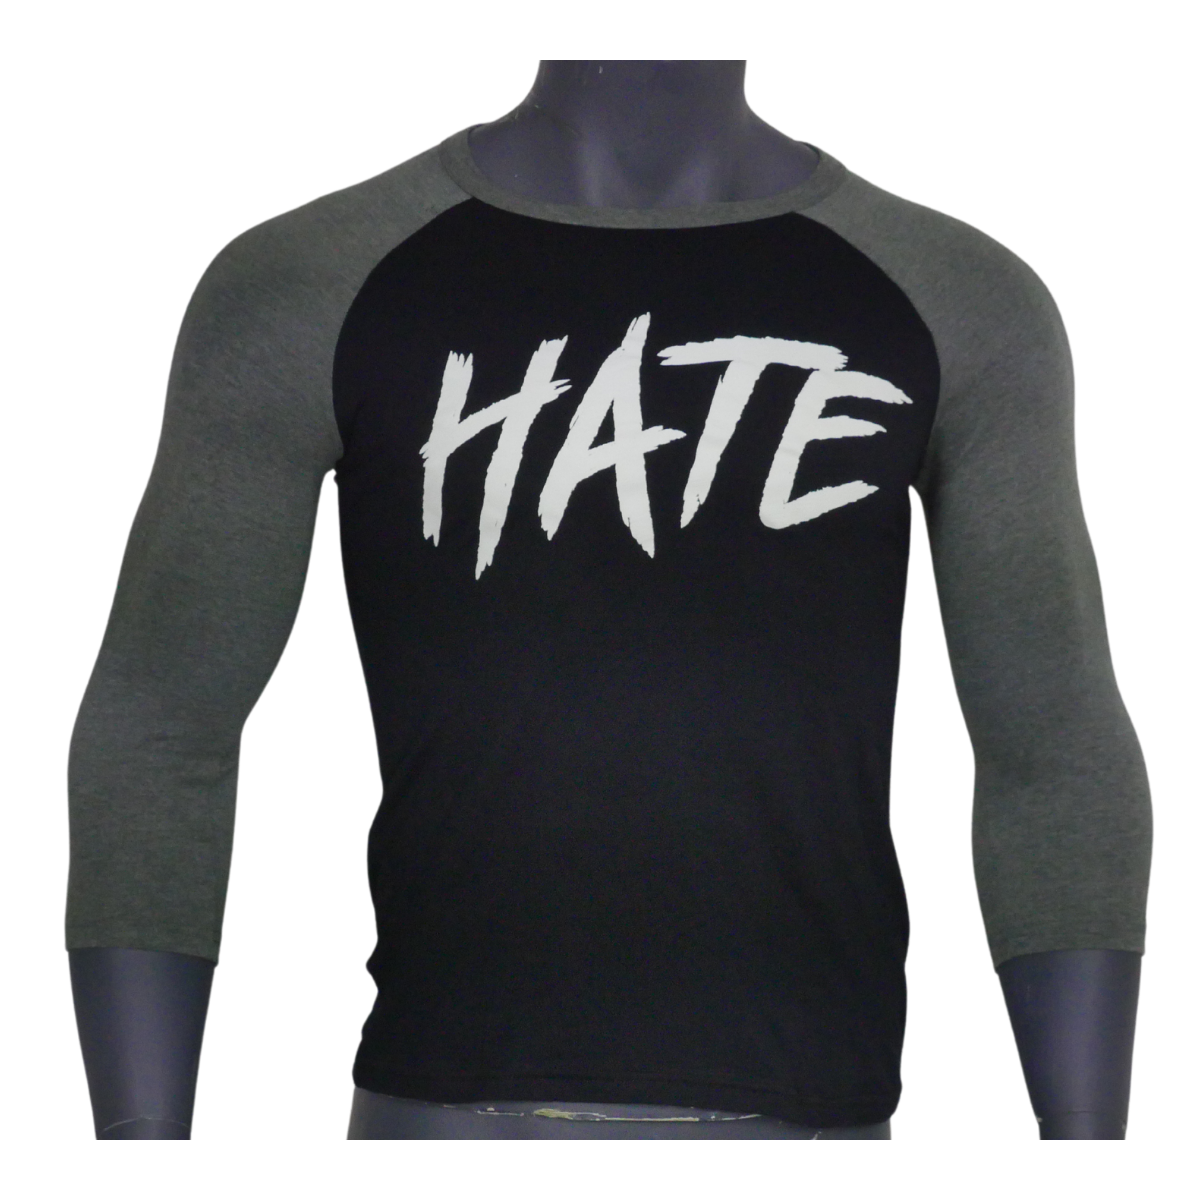 HATE 3/4 Sleeve Shirt Black/Deep Grey